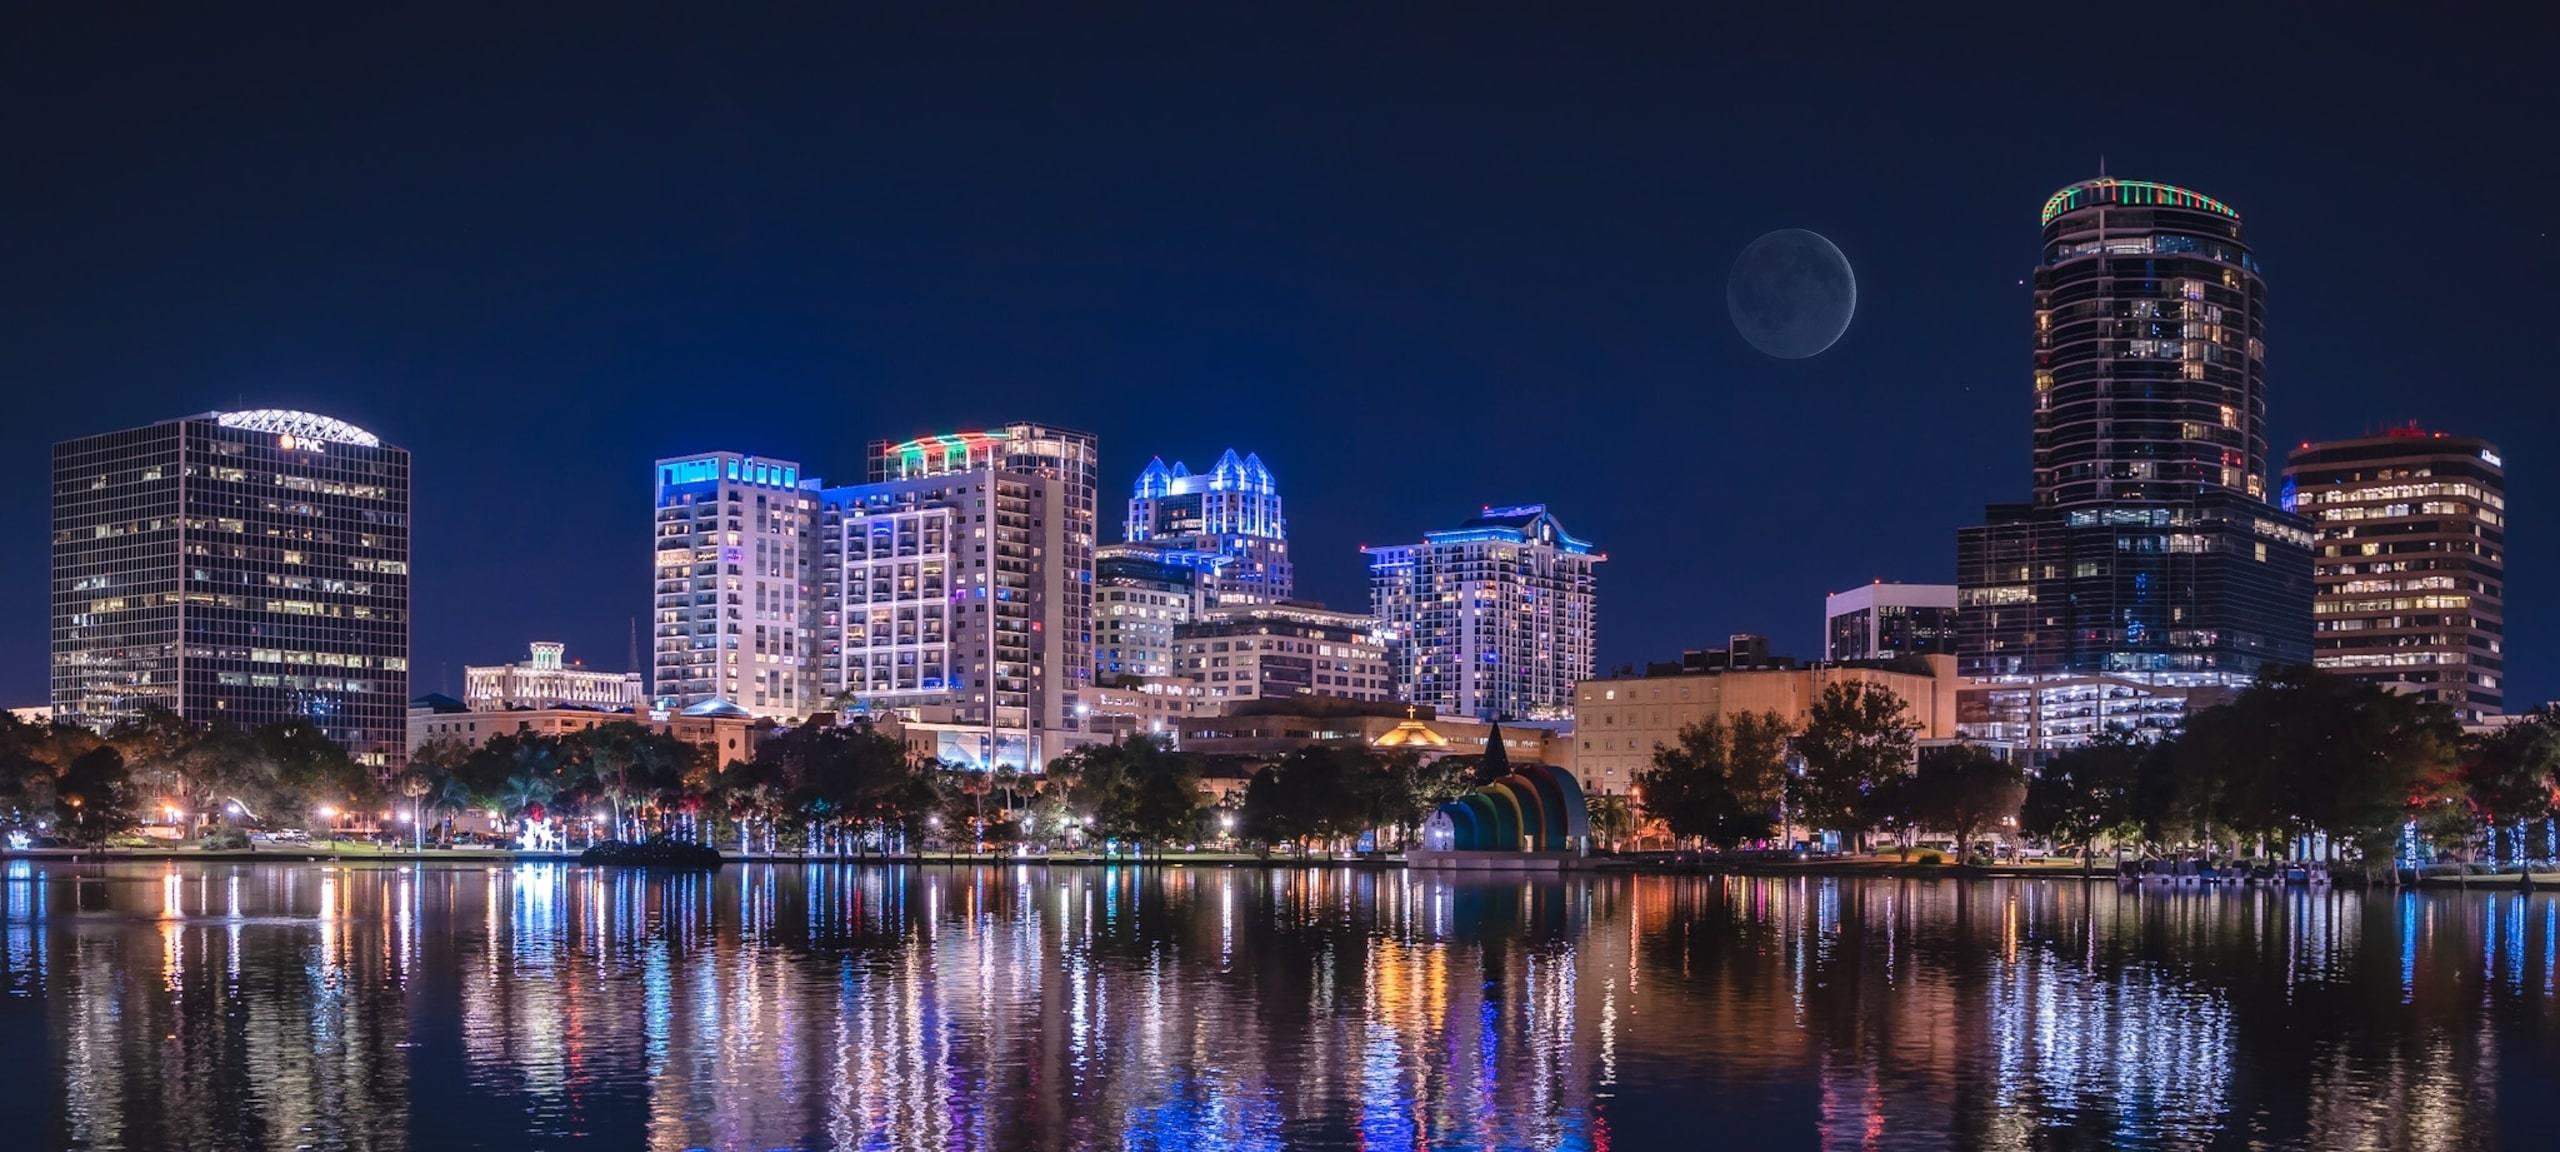 Night view of downtown Orlando waterfront condos